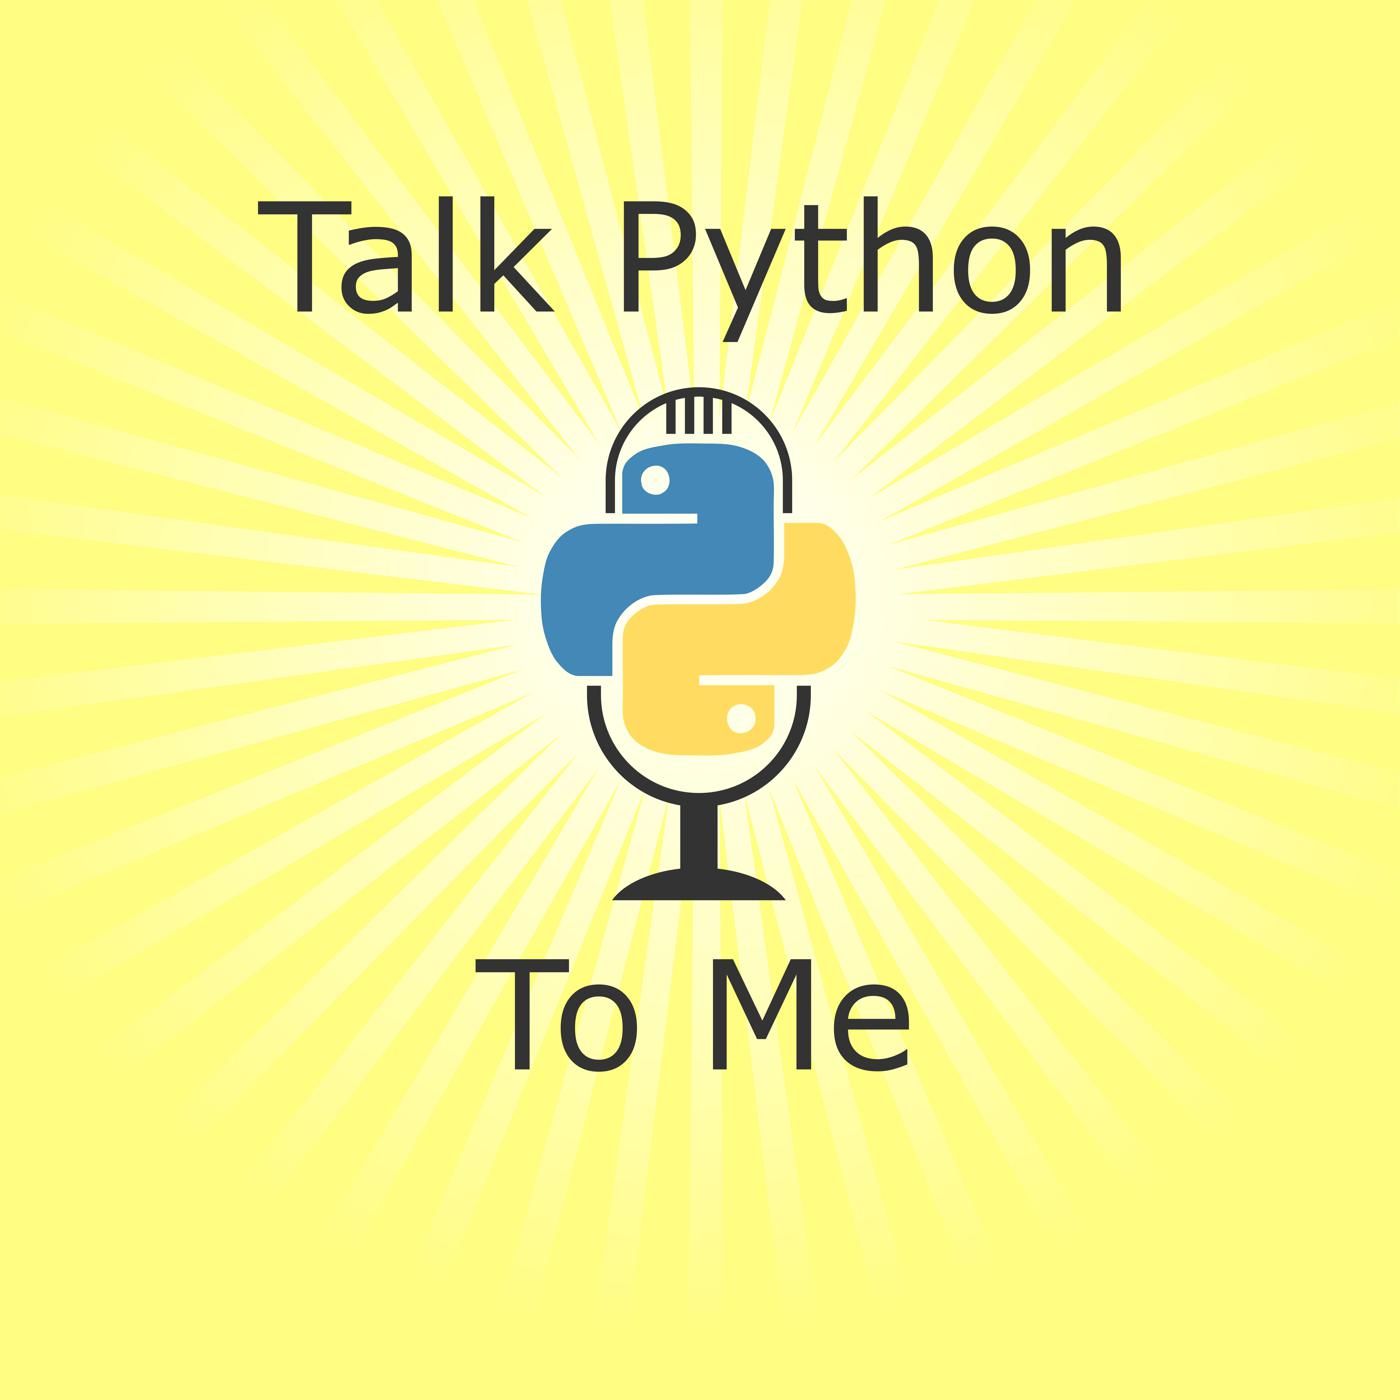 talk-python-to-me-python-conversations-for-e85UJ2PBSAi.1400x1400